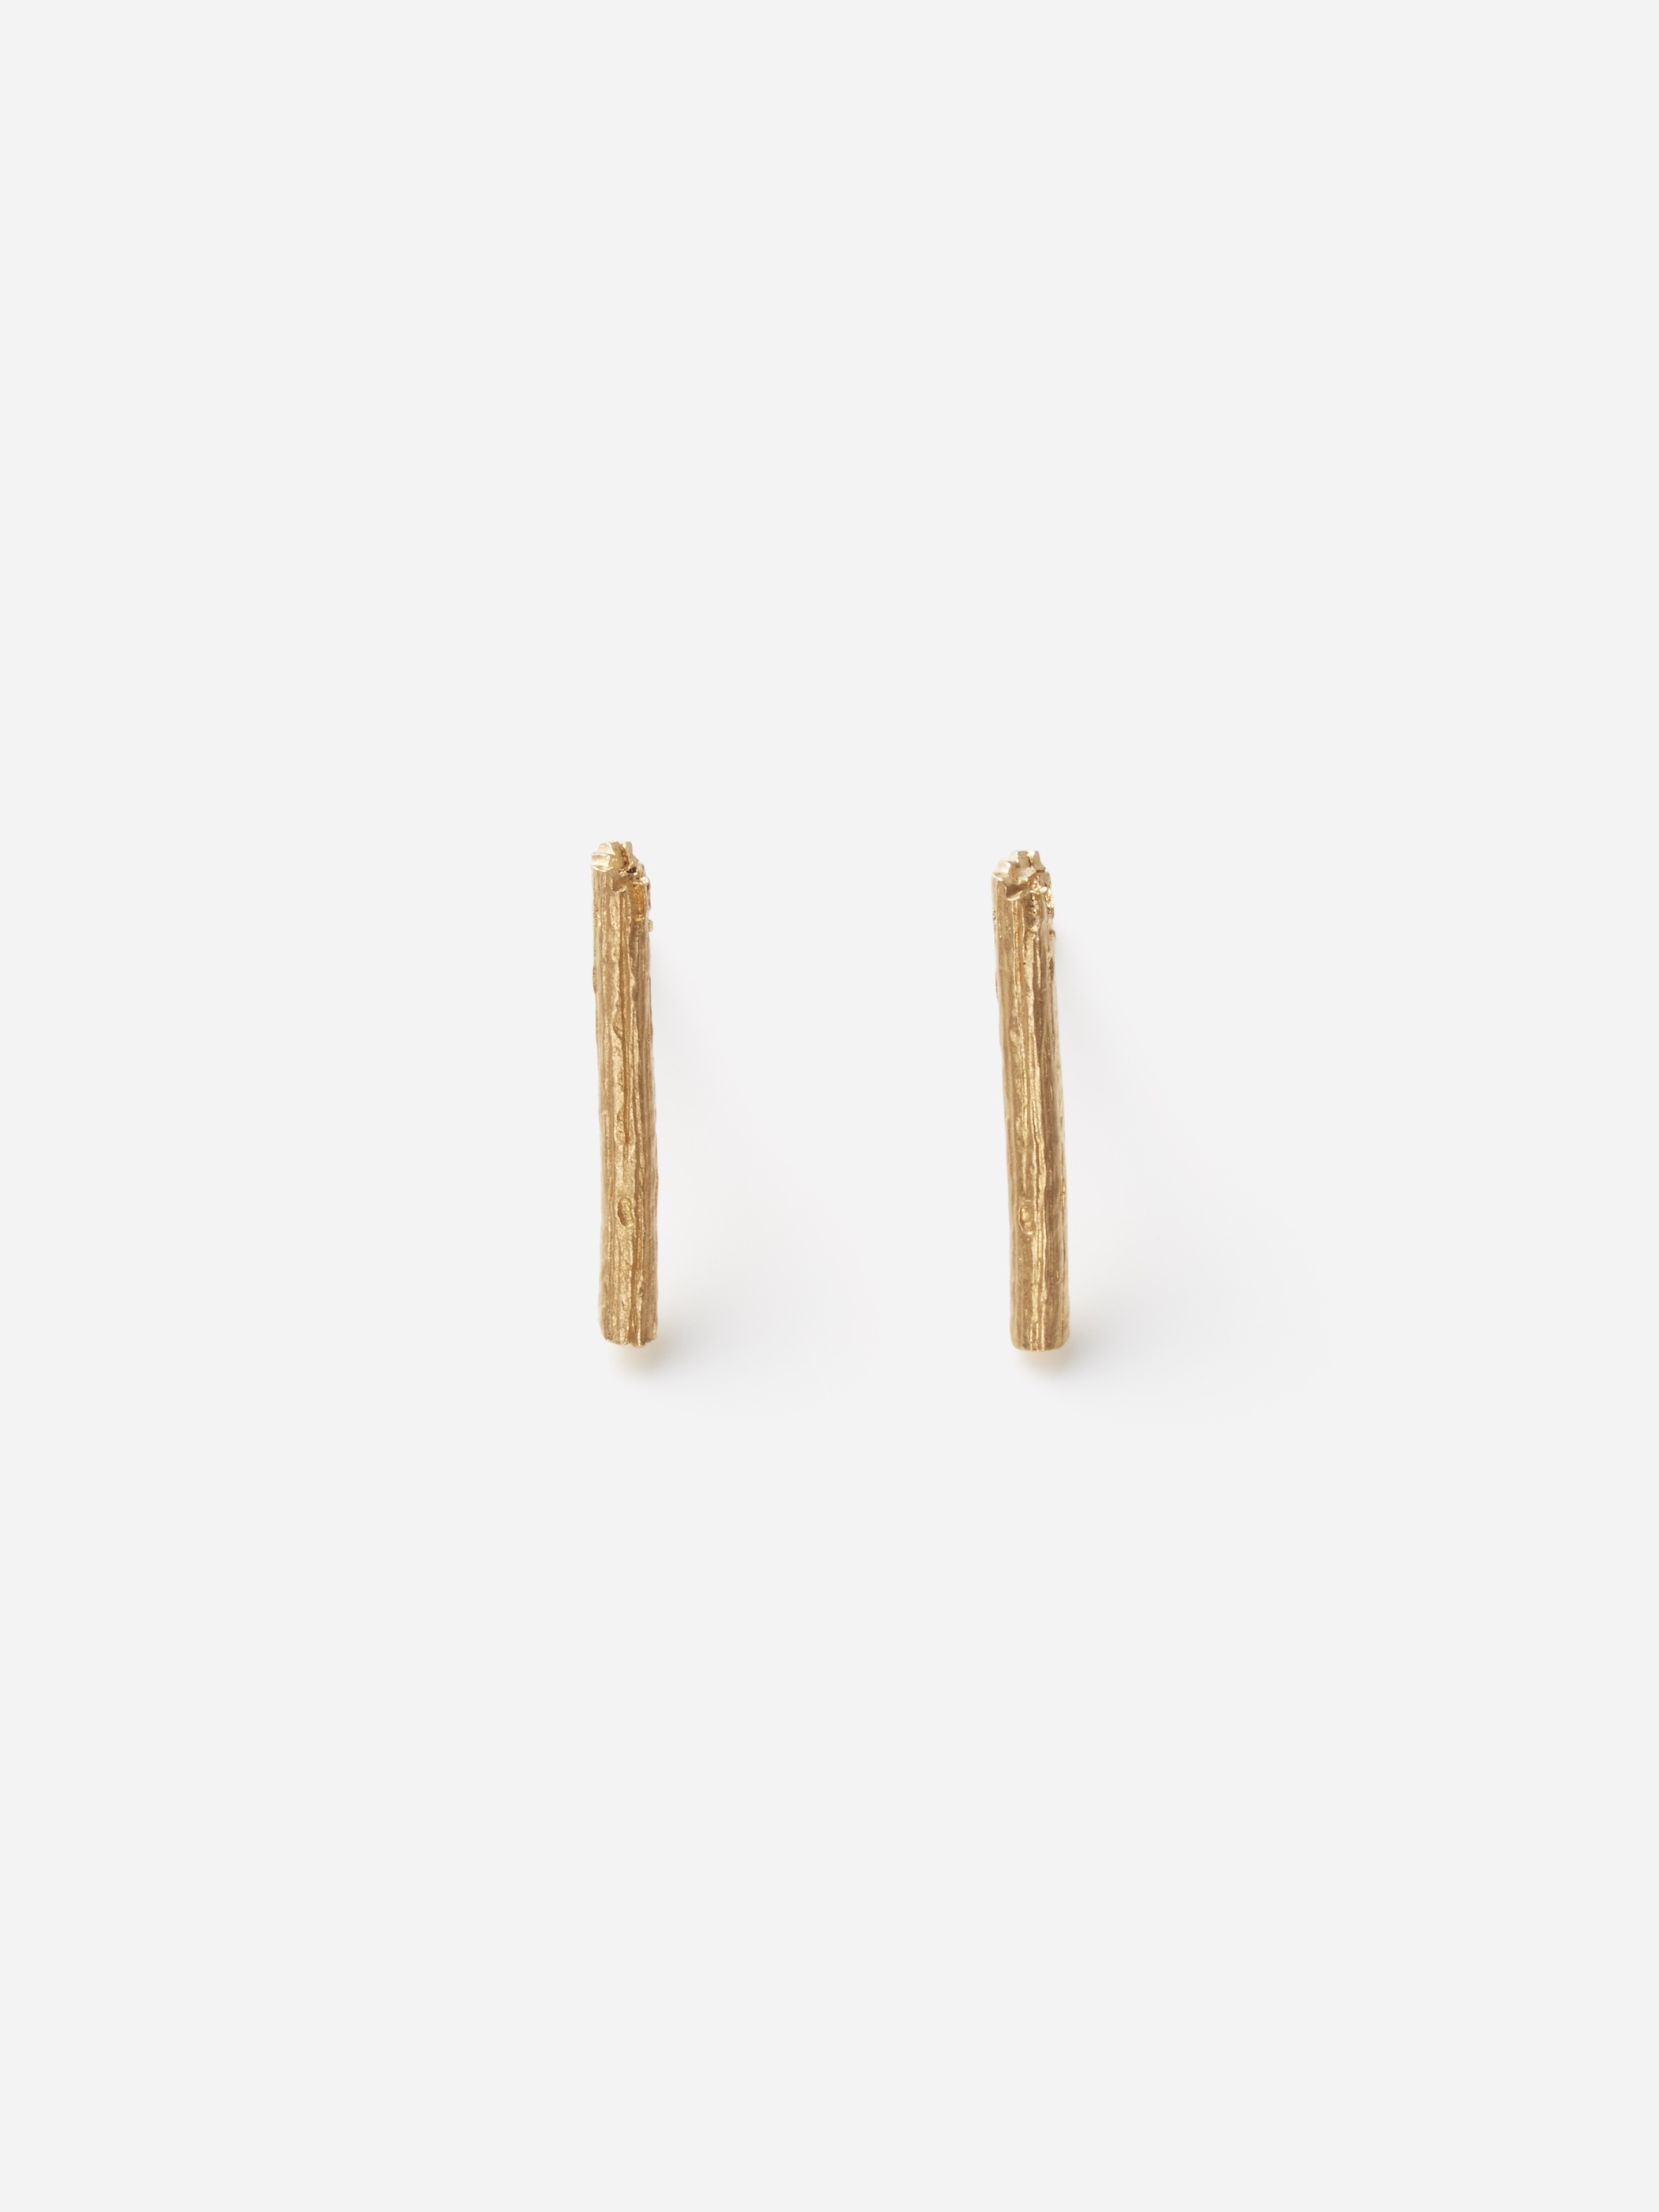 Wataru Yamazaki / Twig A / Pierced earrings / ピアス